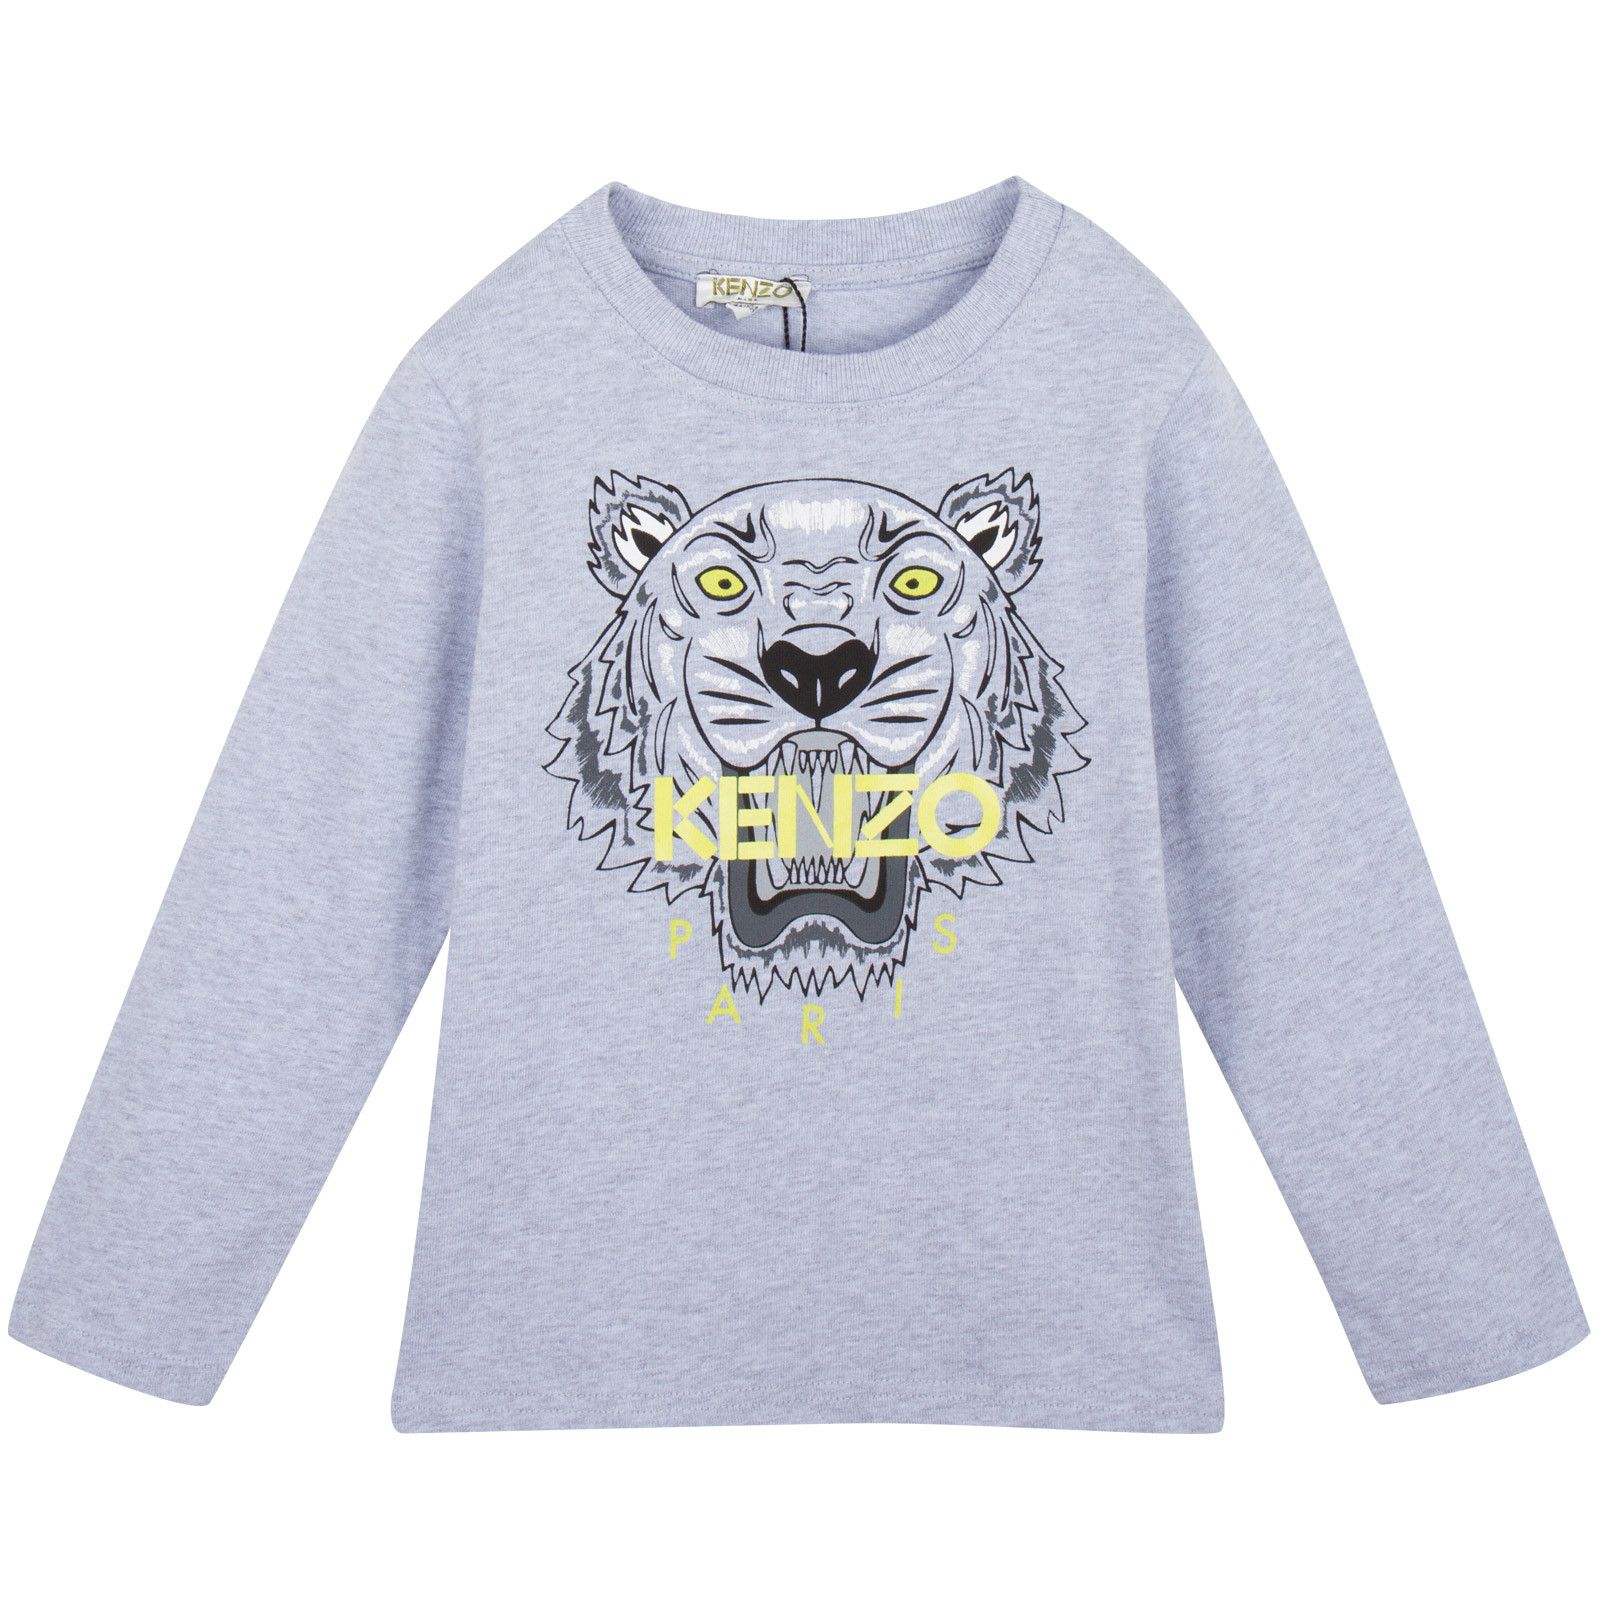 Boys Grey Tiger Embroidered Cotton Jersey T-Shirt - CÉMAROSE | Children's Fashion Store - 1